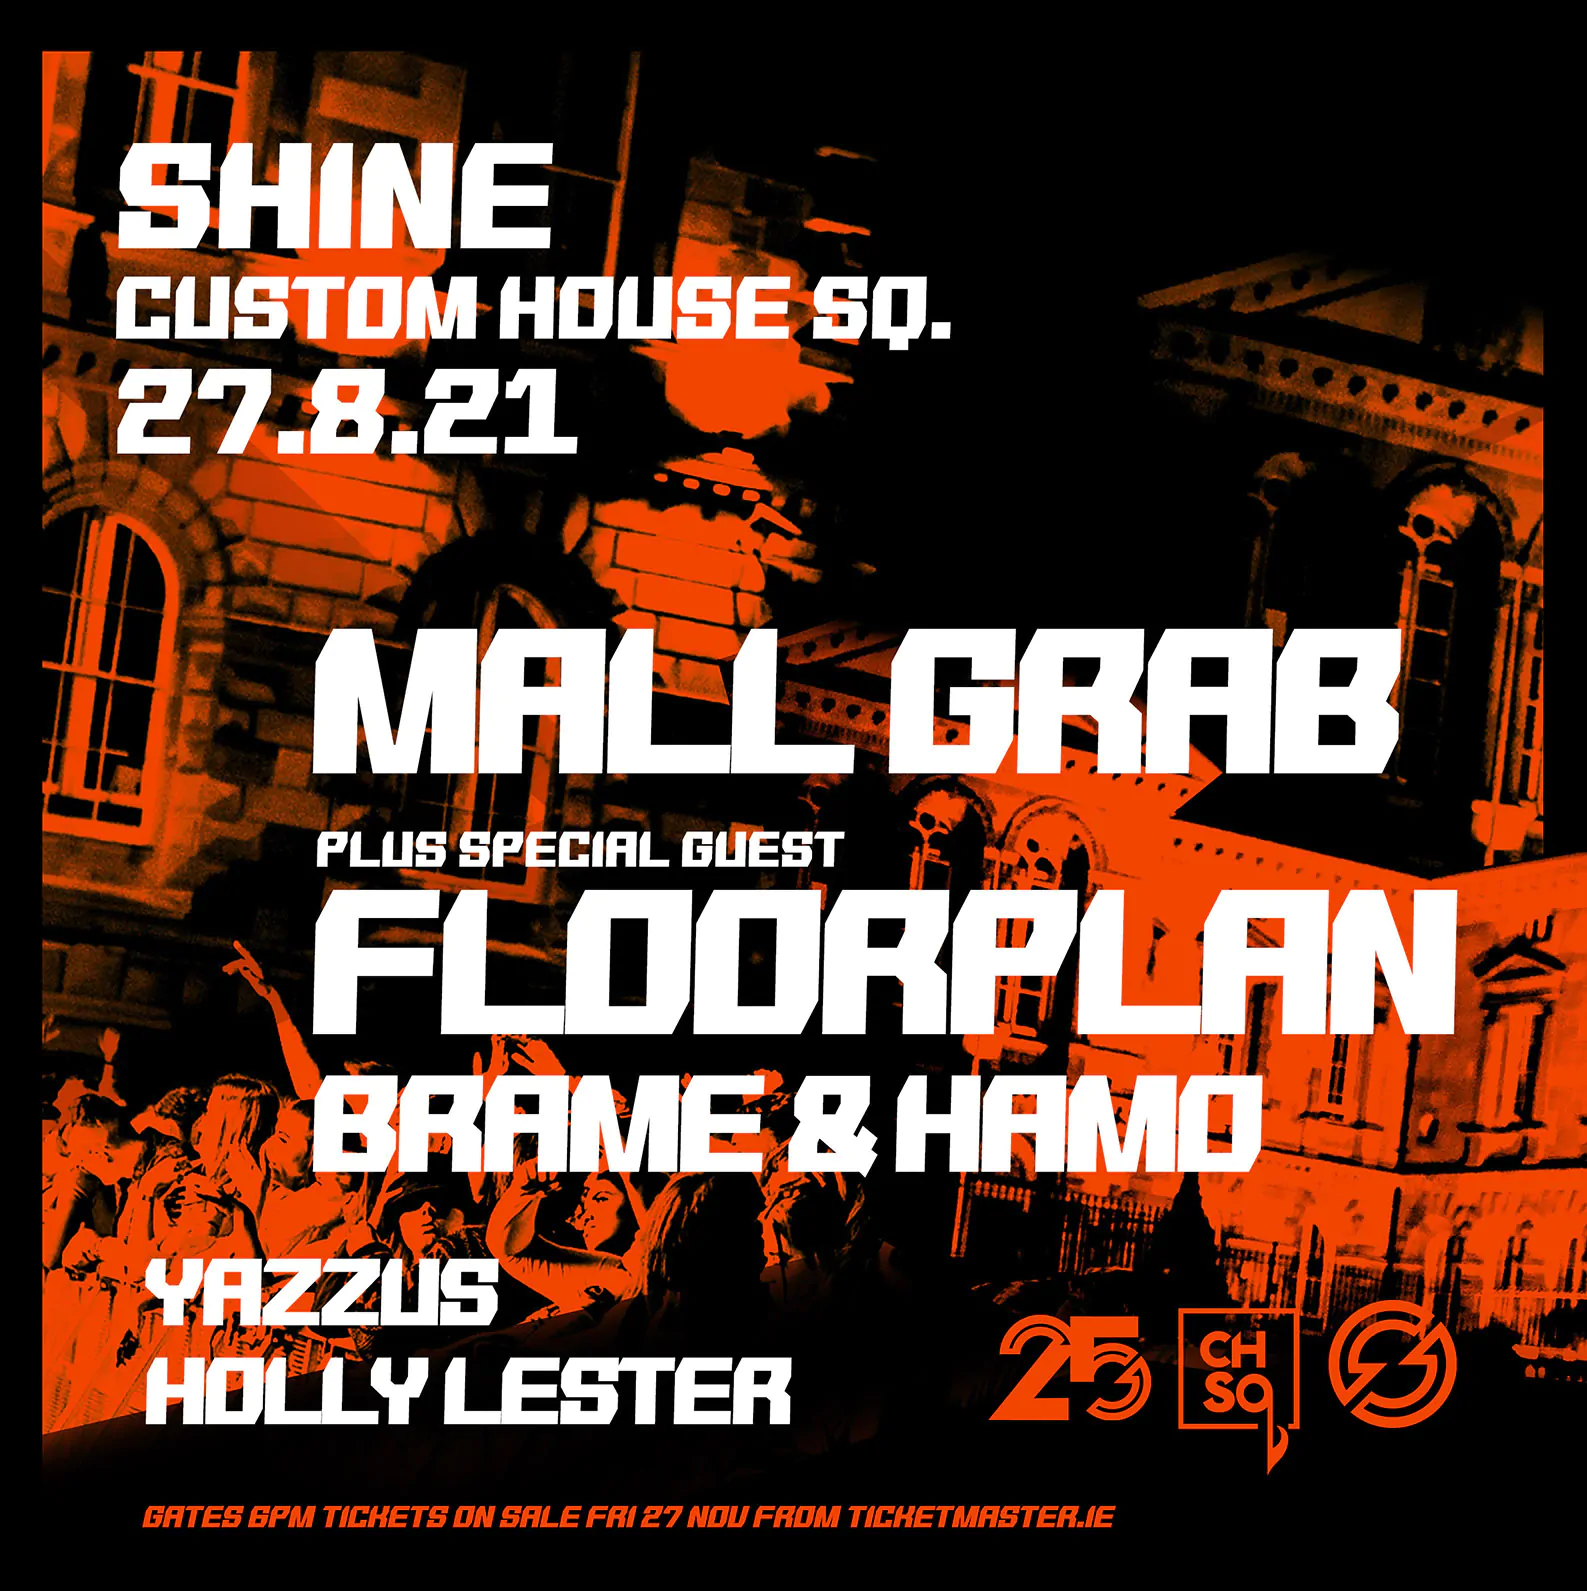 MALL GRAB announces headline Belfast show at SHINE @ CHSq in August 2021